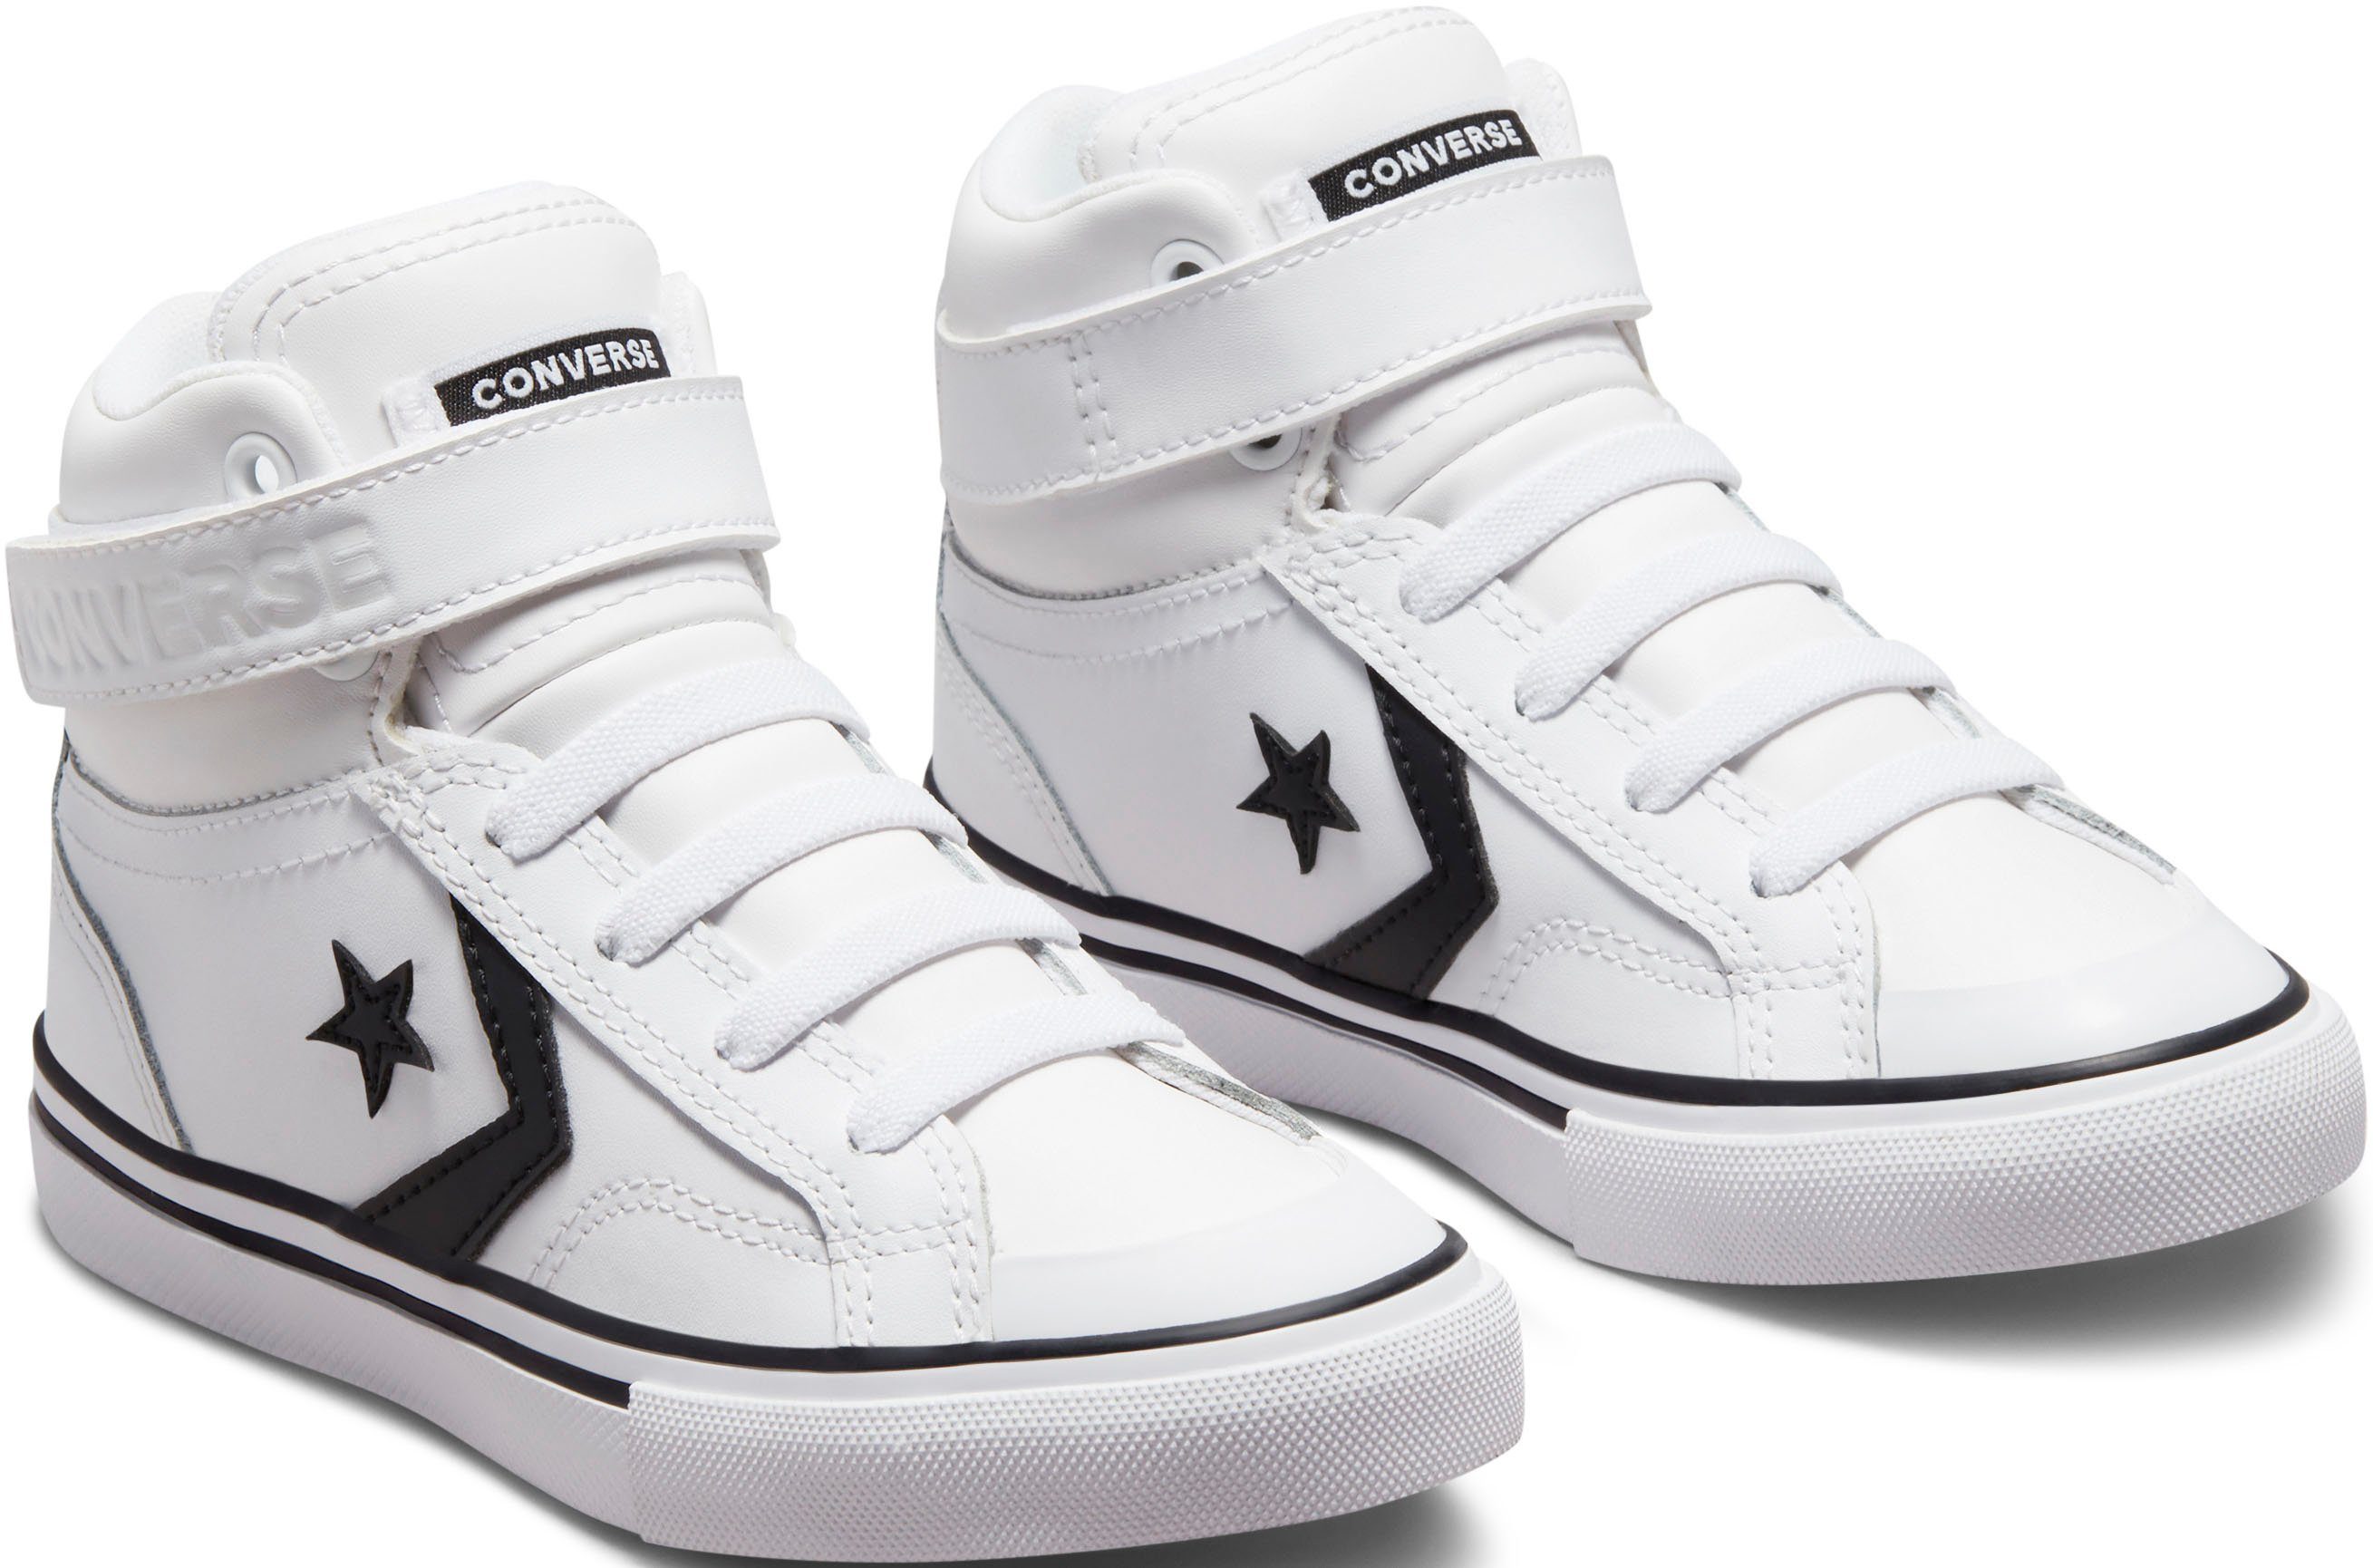 BLAZE STRAP PRO Converse LEATHER weiß-schwarz Sneaker